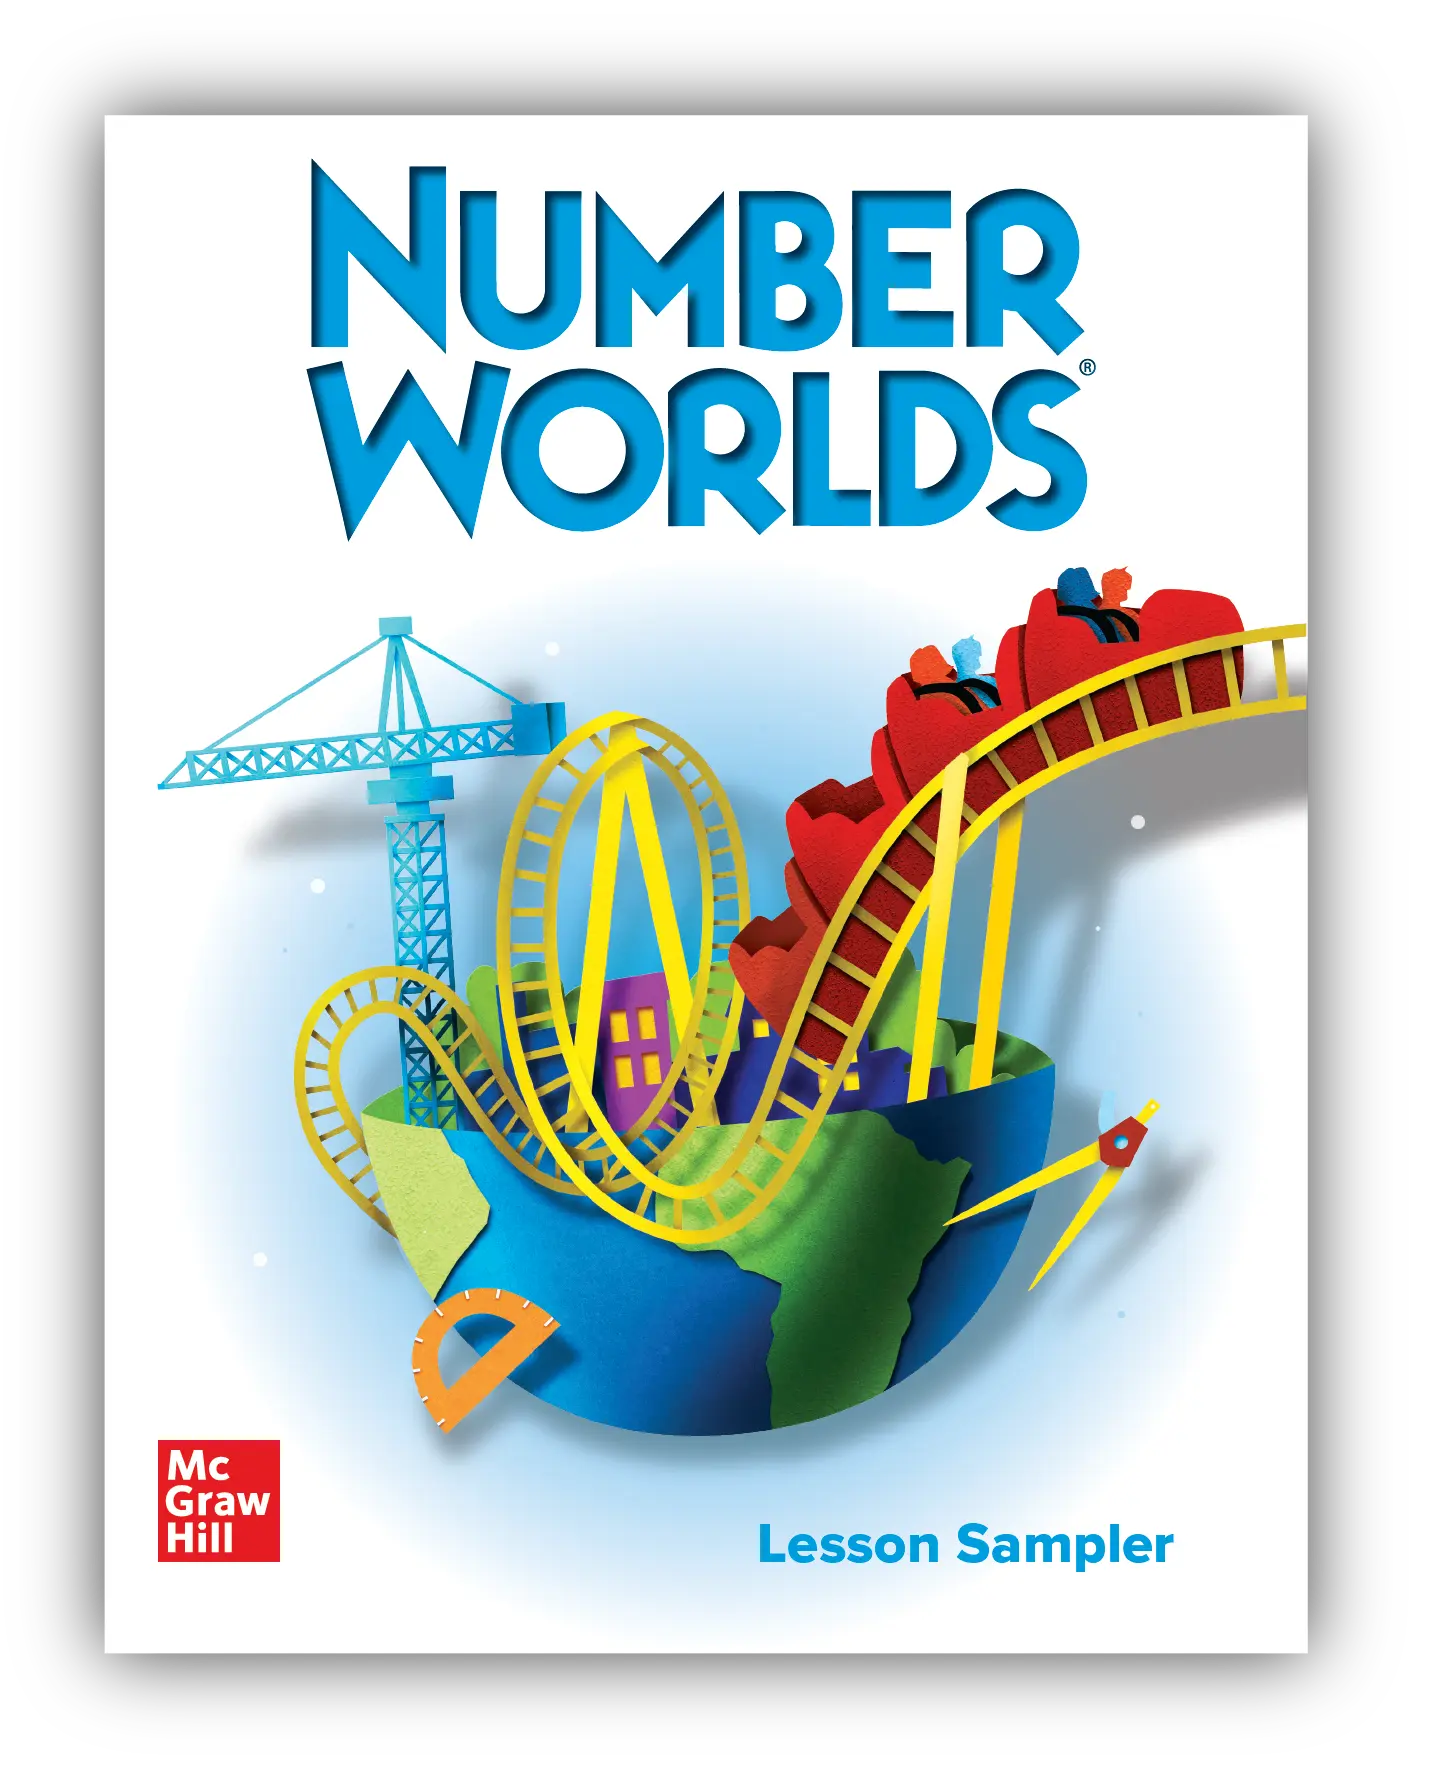 Number Worlds Lesson Sampler cover